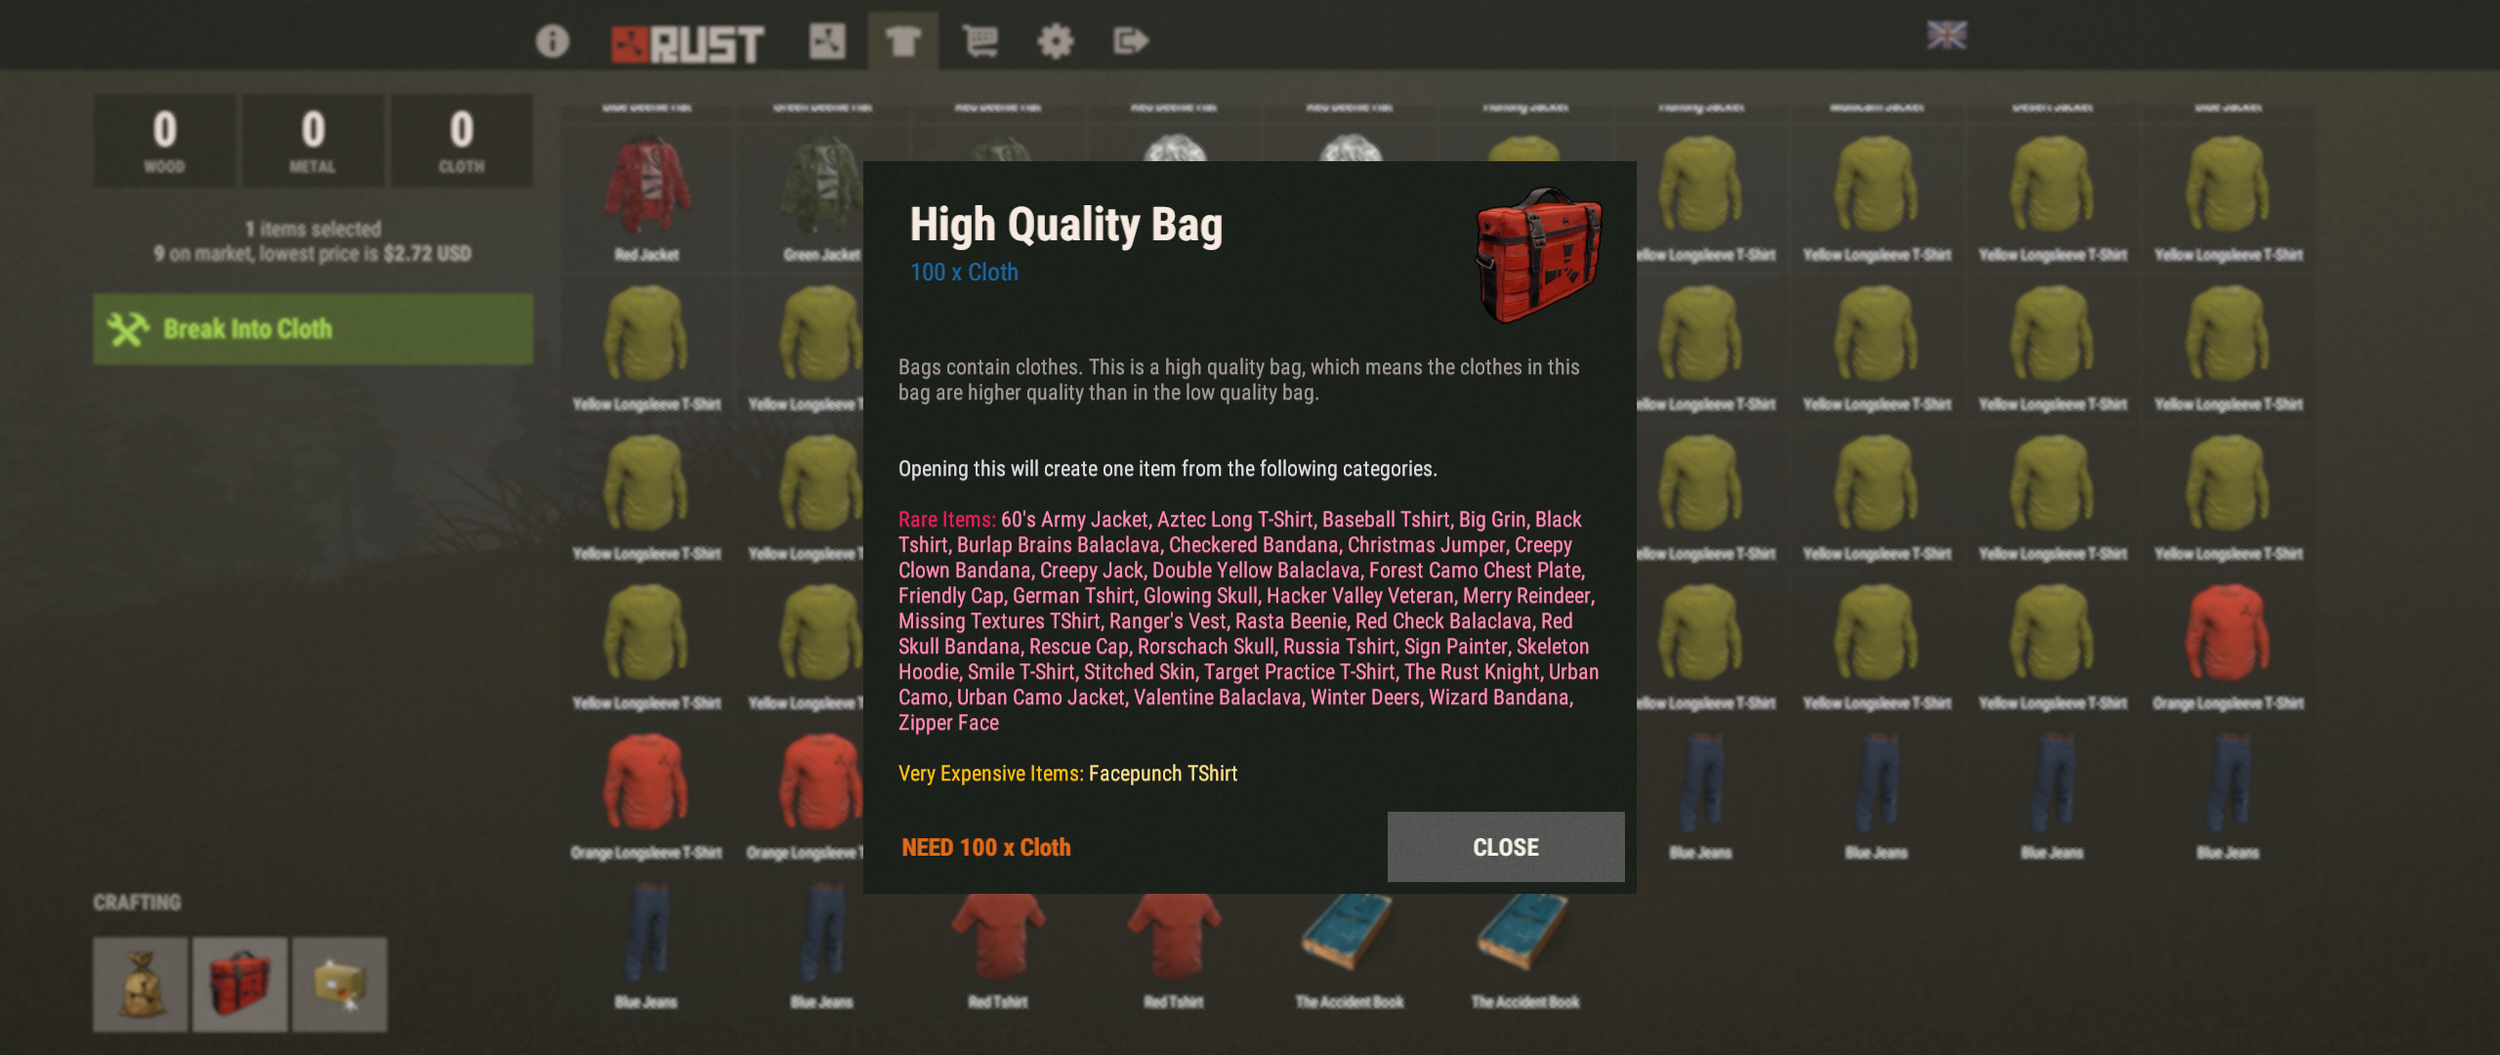 High Quality Bag 